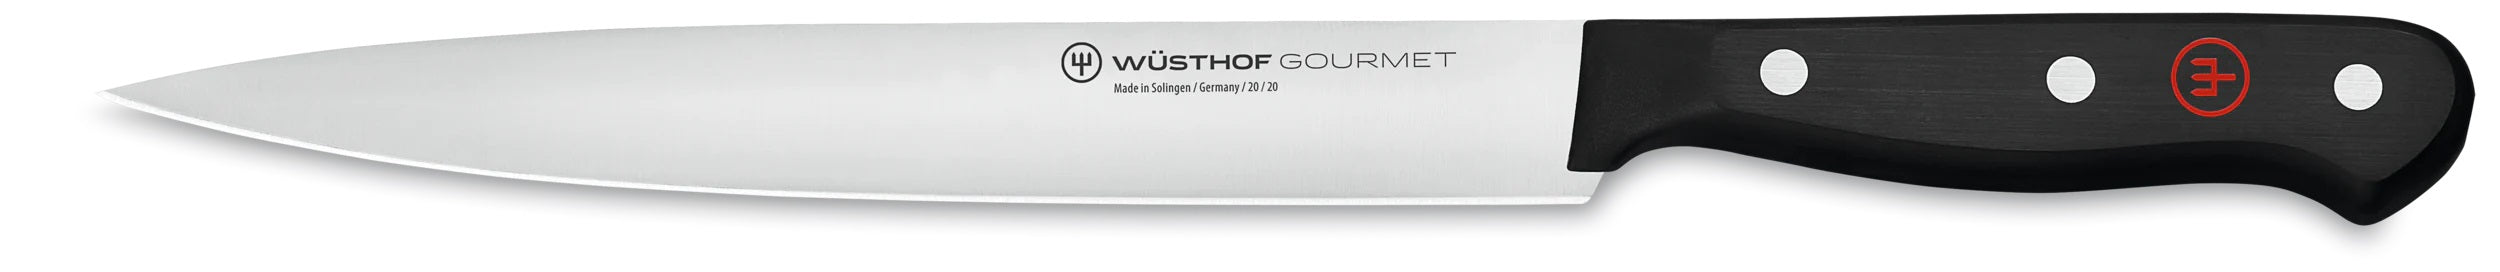 Wusthof Gourmet 8" Carving Knife 1025048820